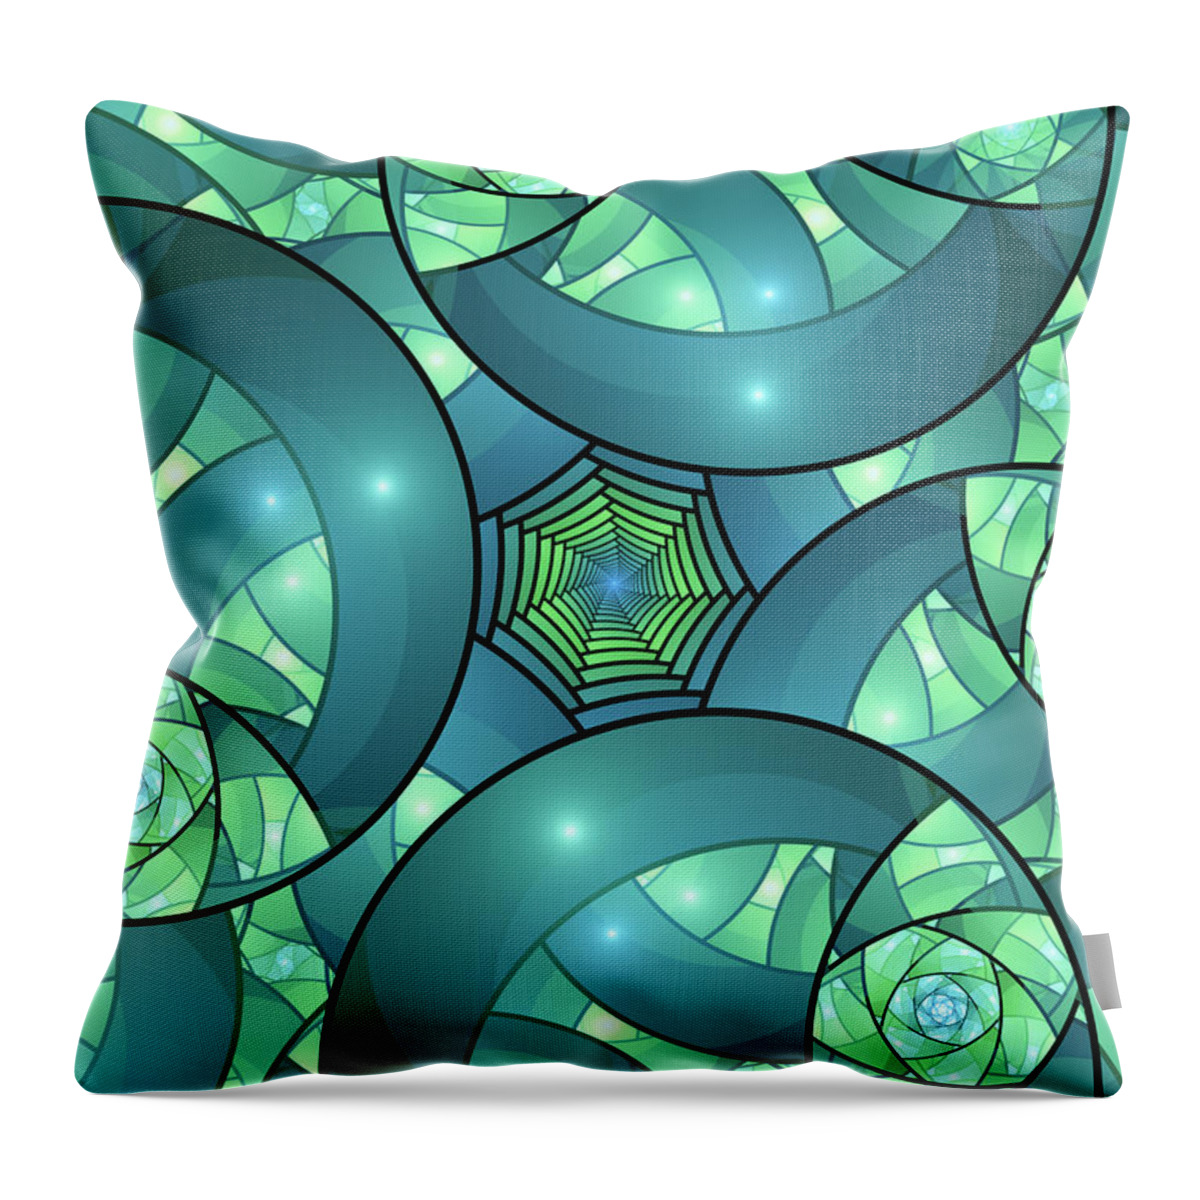 Bright Throw Pillow featuring the digital art Art Deco by Gabiw Art